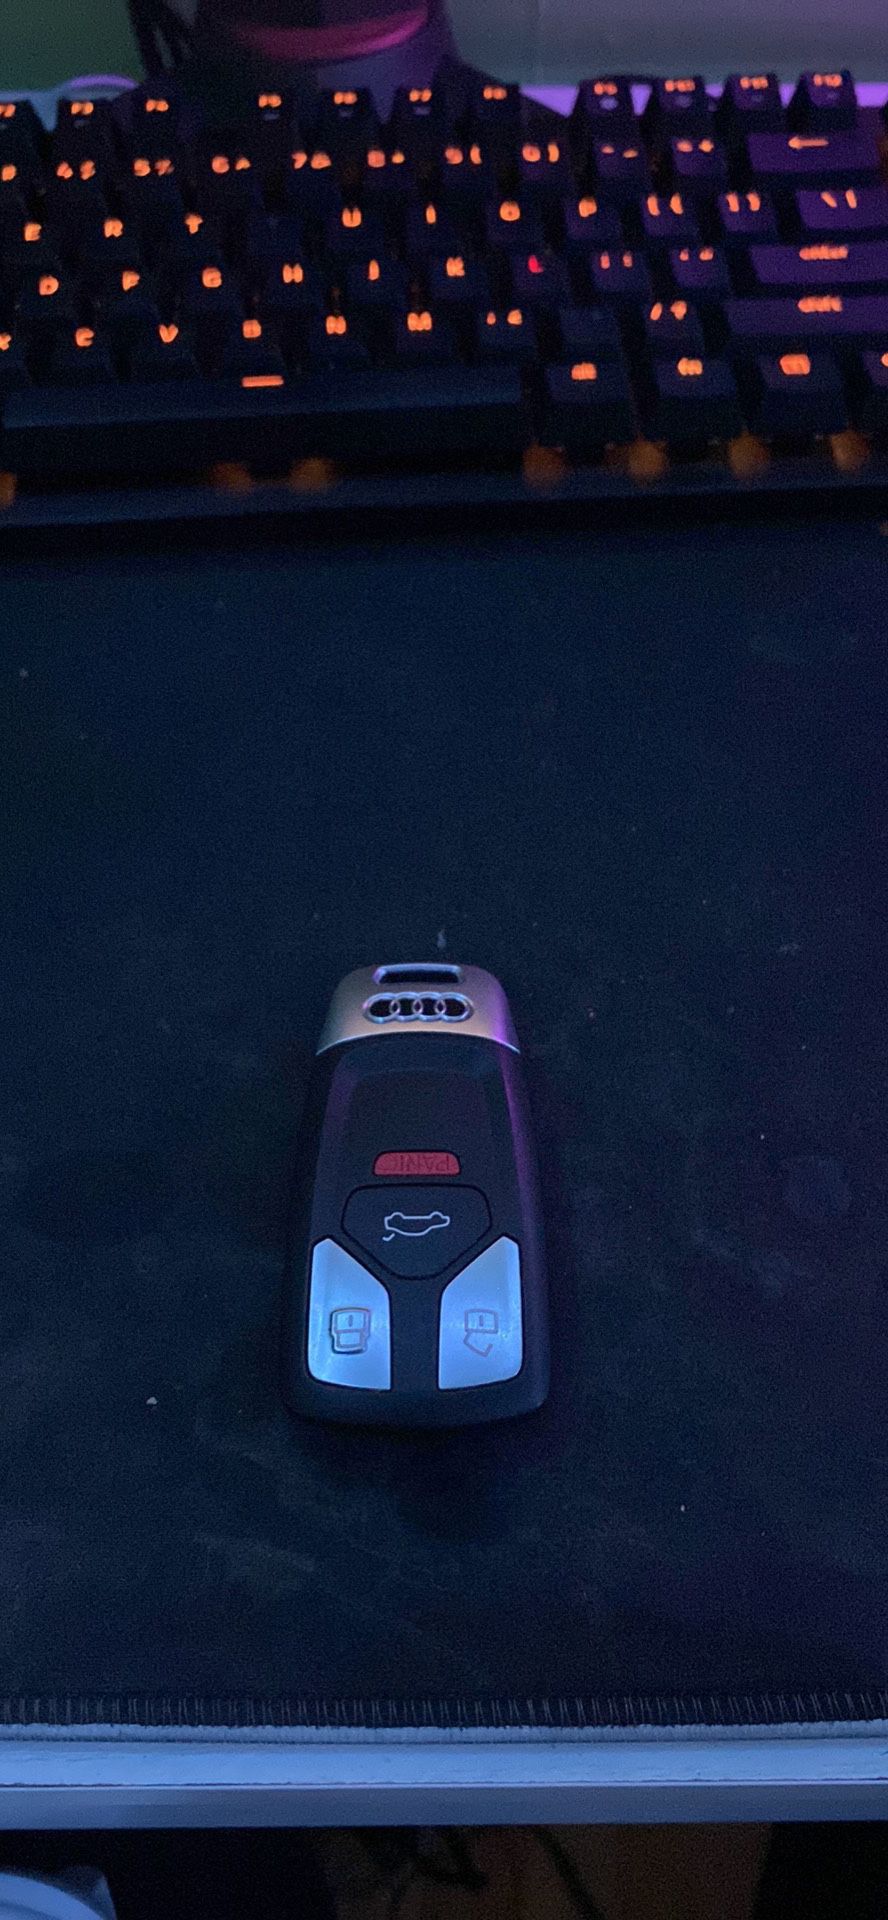 Audi Key Fob